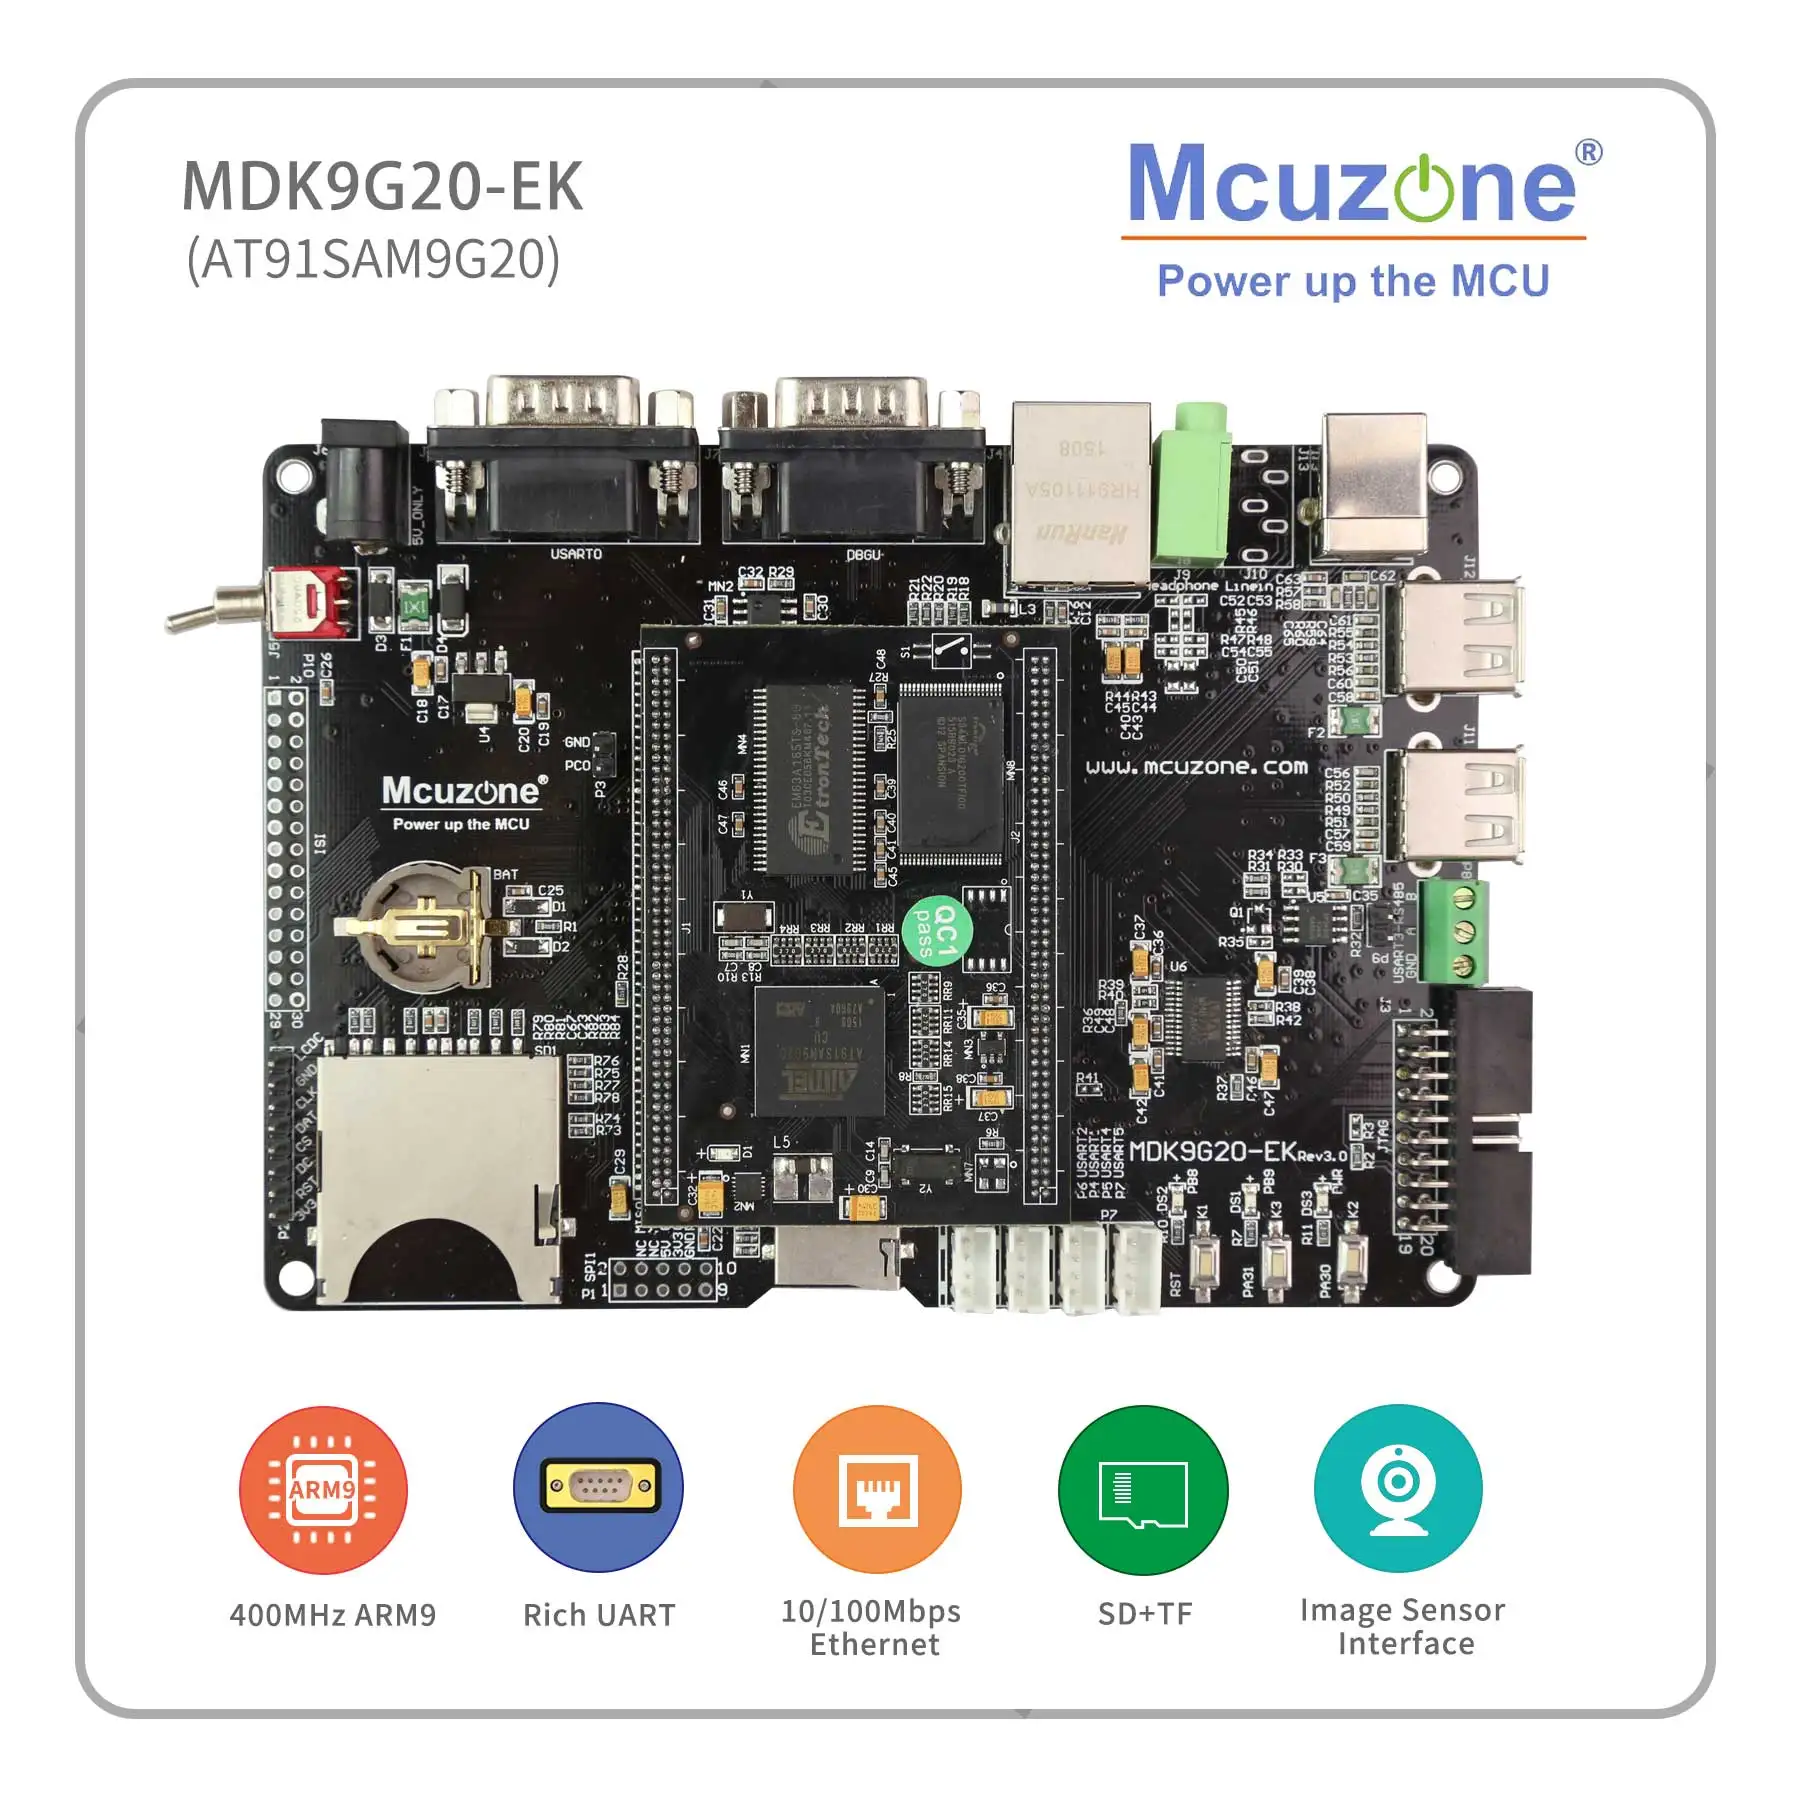 MDK9G20-EK AT91SAM9G20 ARM9 ,ATMEL MCIROCHIP 400MHz sam9g20 9G20 Remote Controlle IoT GateWay